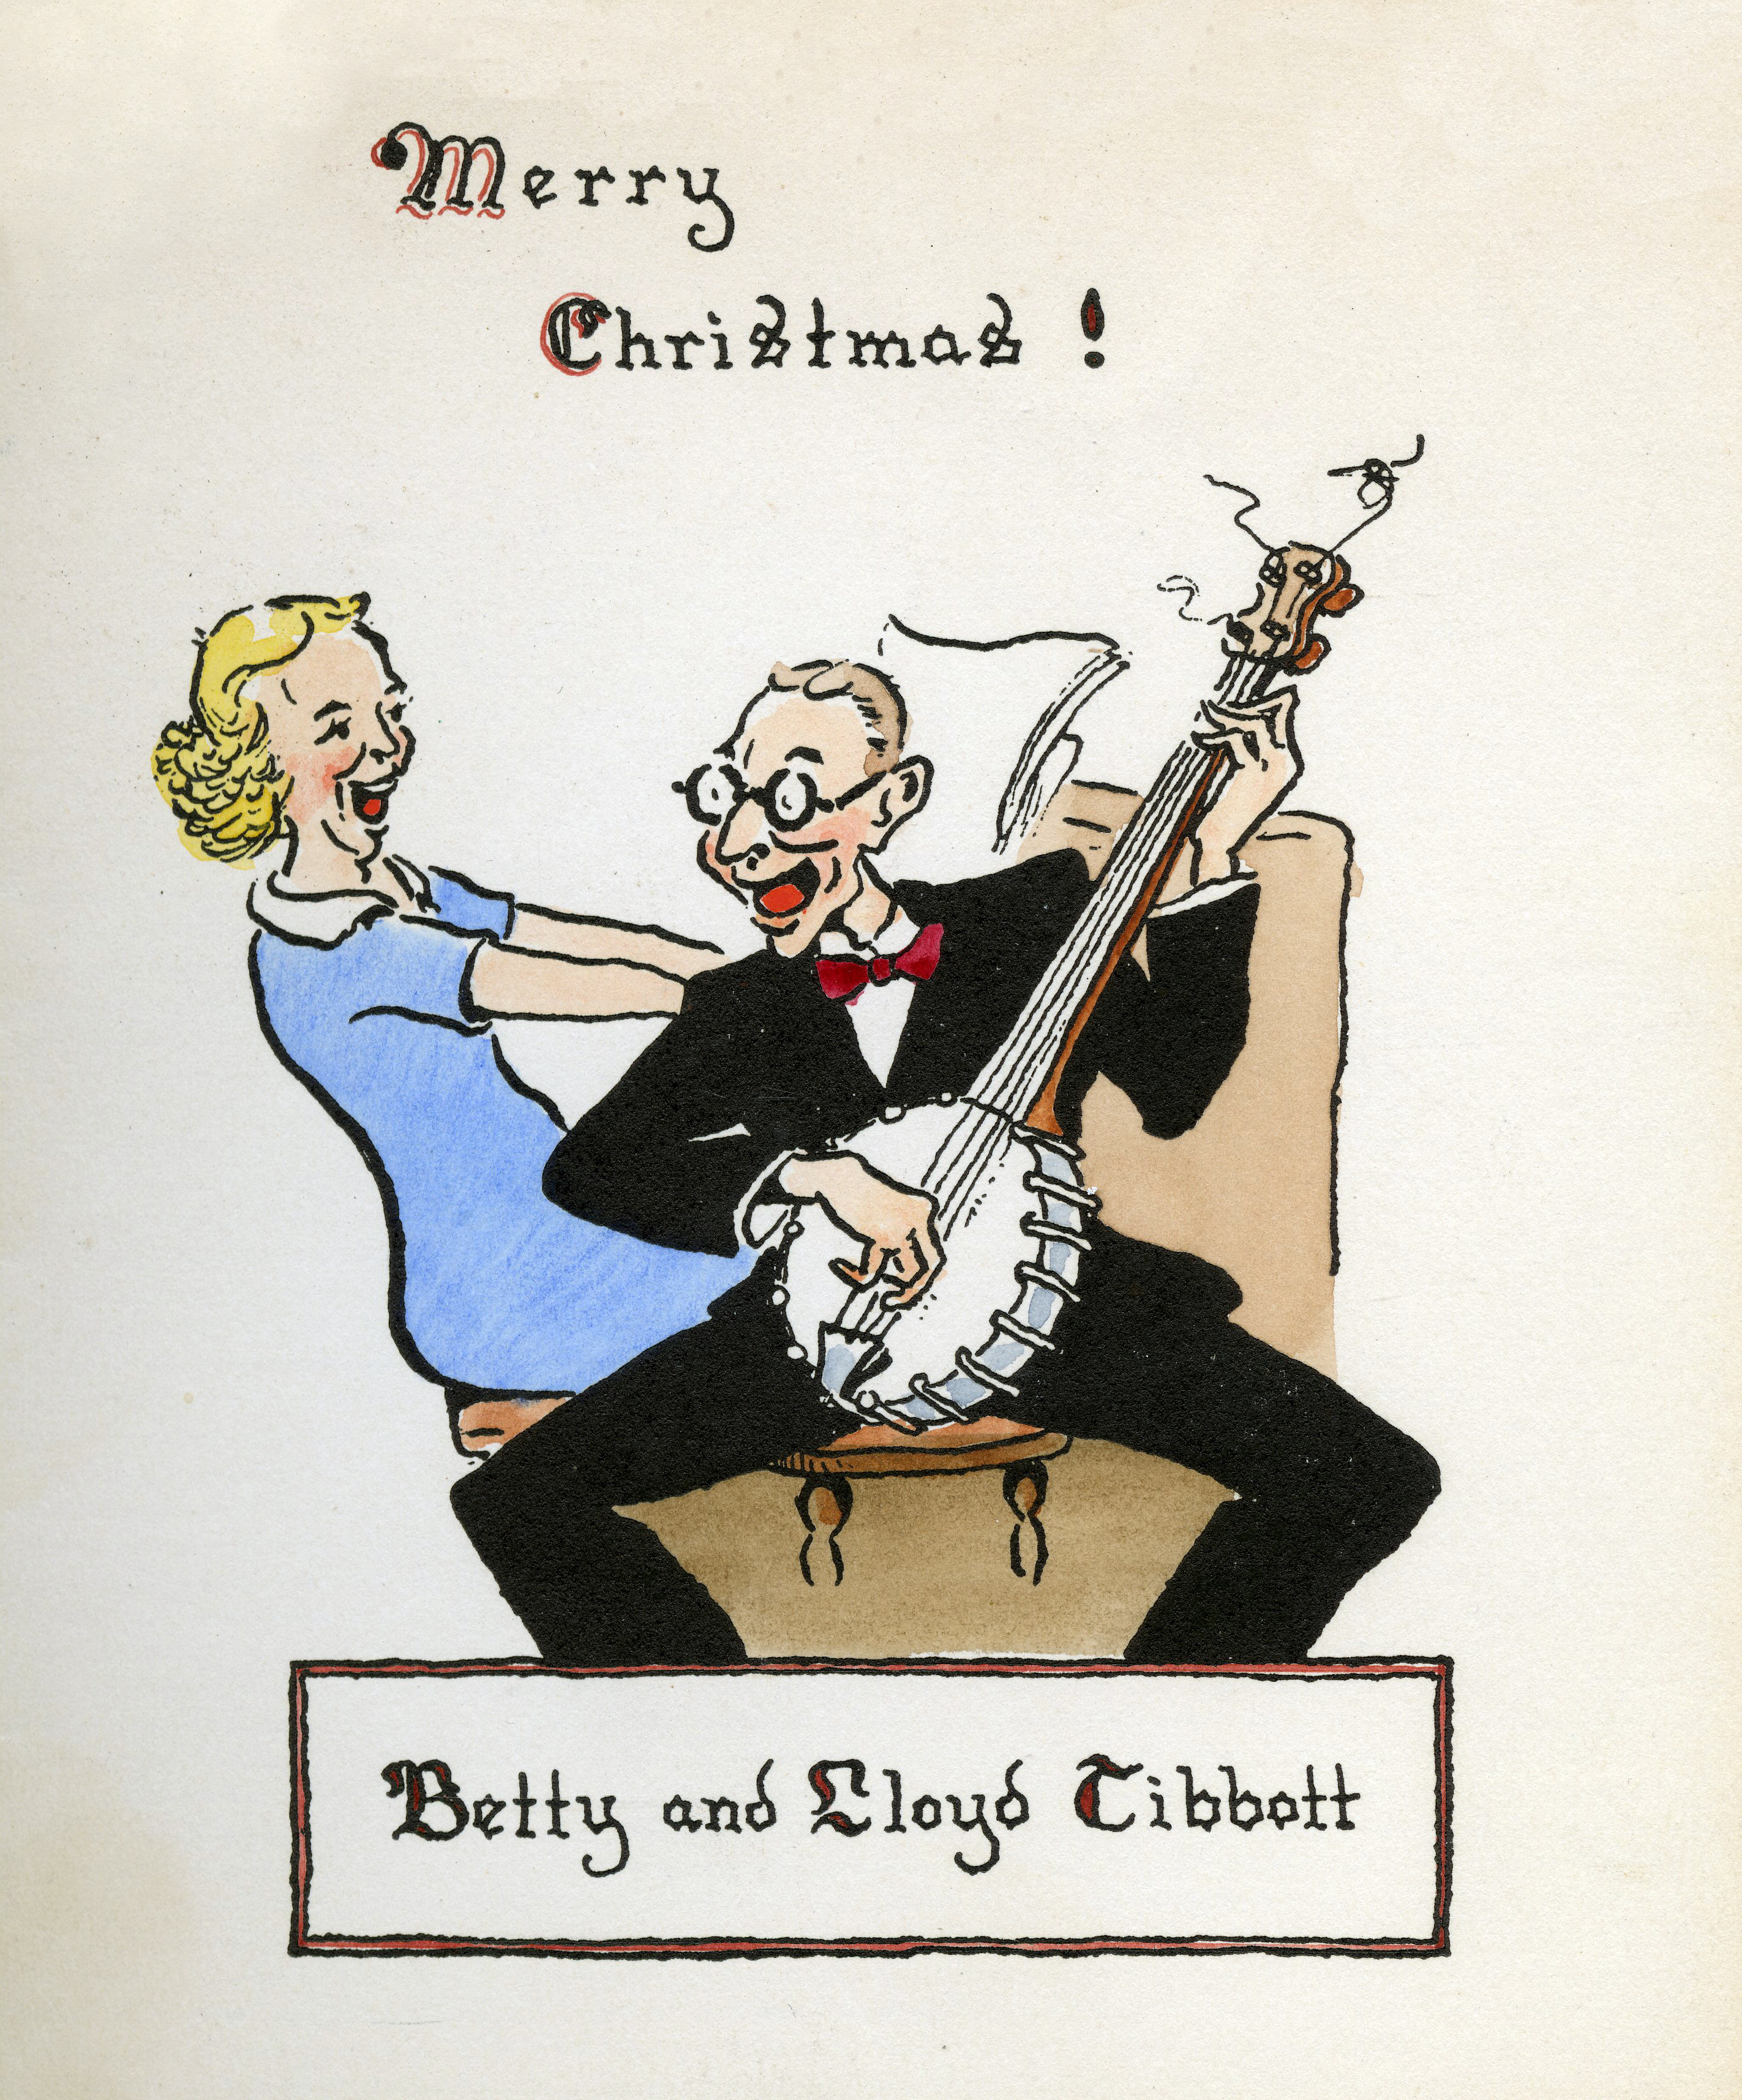 Lloyd_Tibbott_Christmas_card3